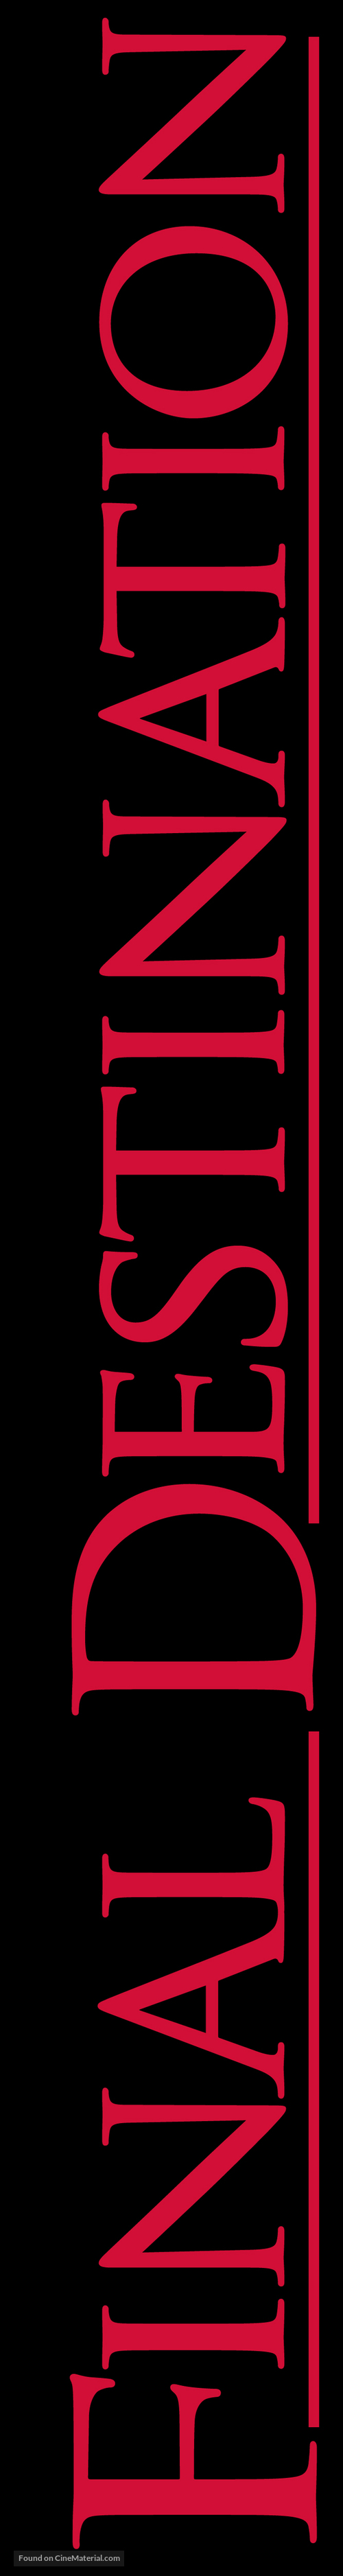 Final Destination - Logo